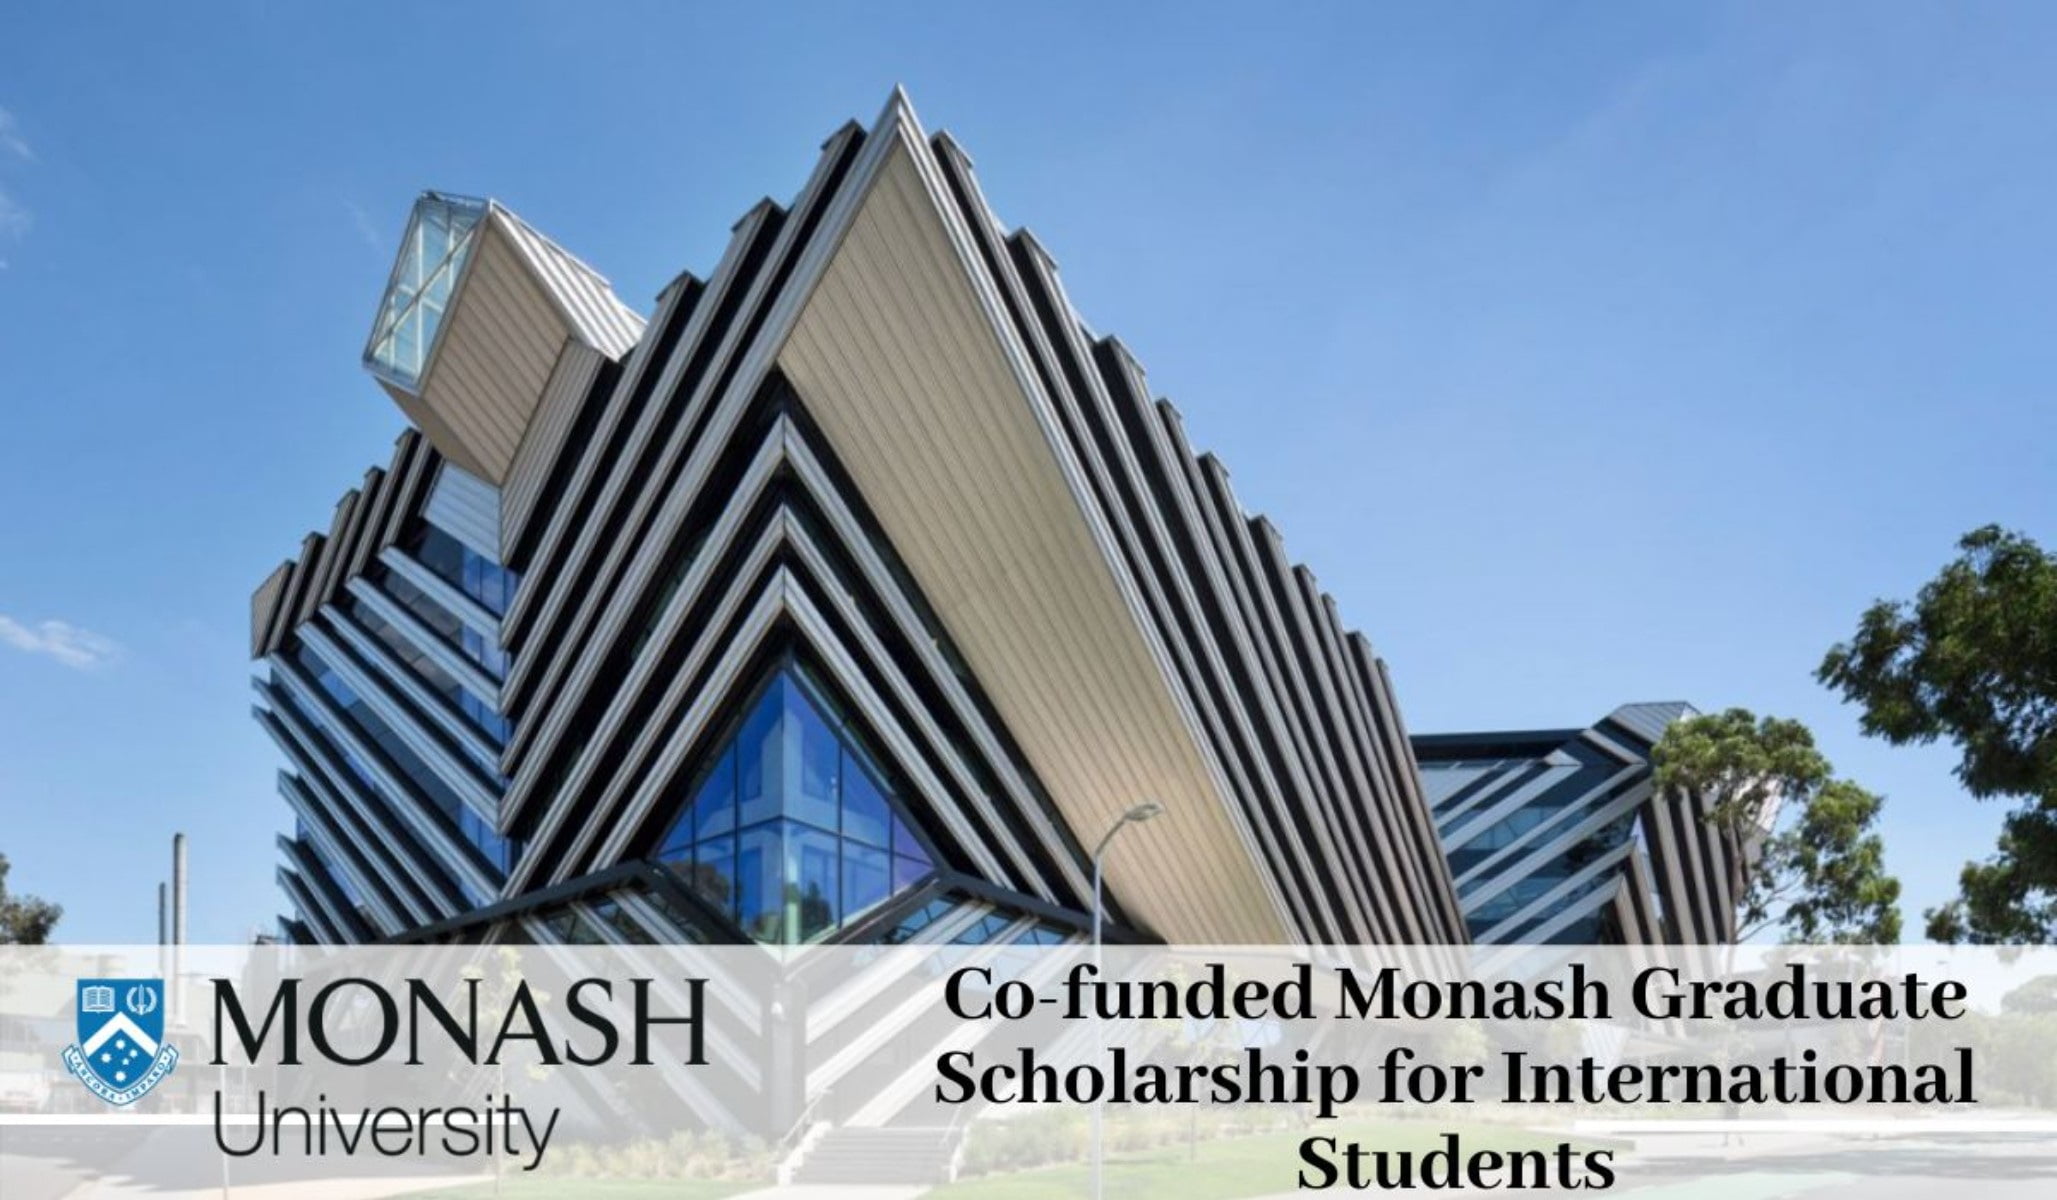 Co-funded Monash Graduate Scholarship 2023 at Monash University in Australia